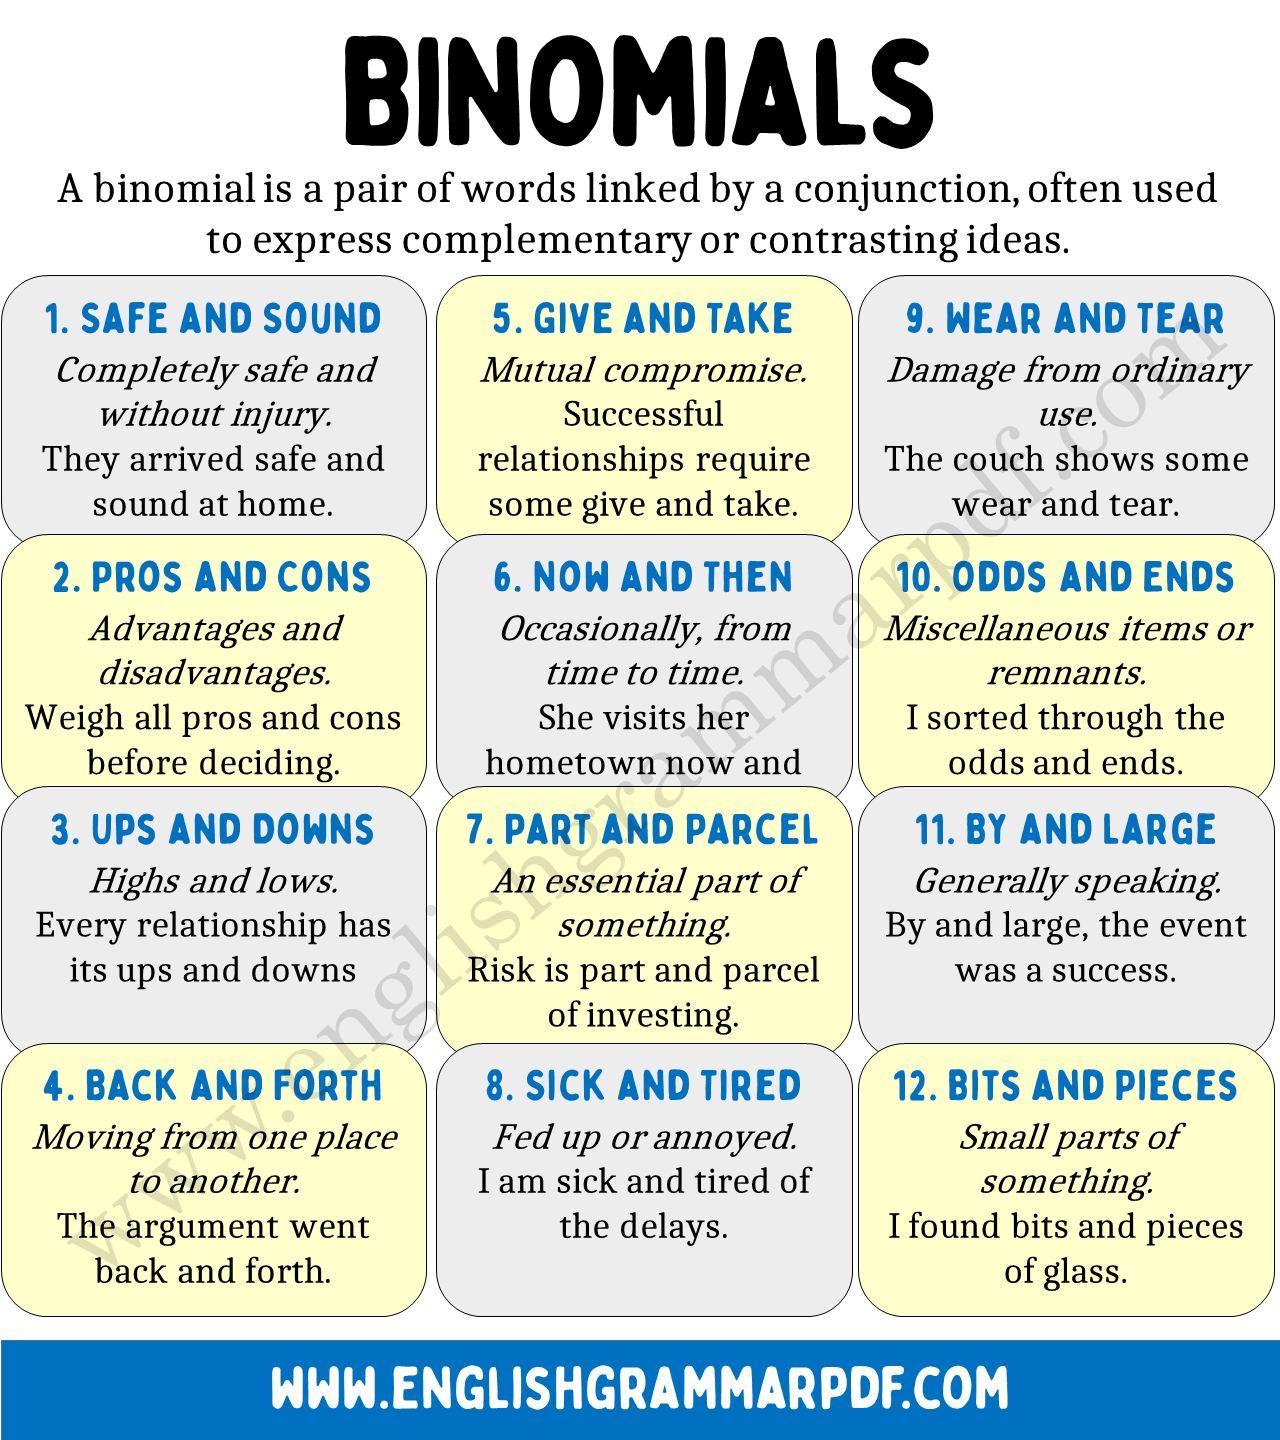 Binomials